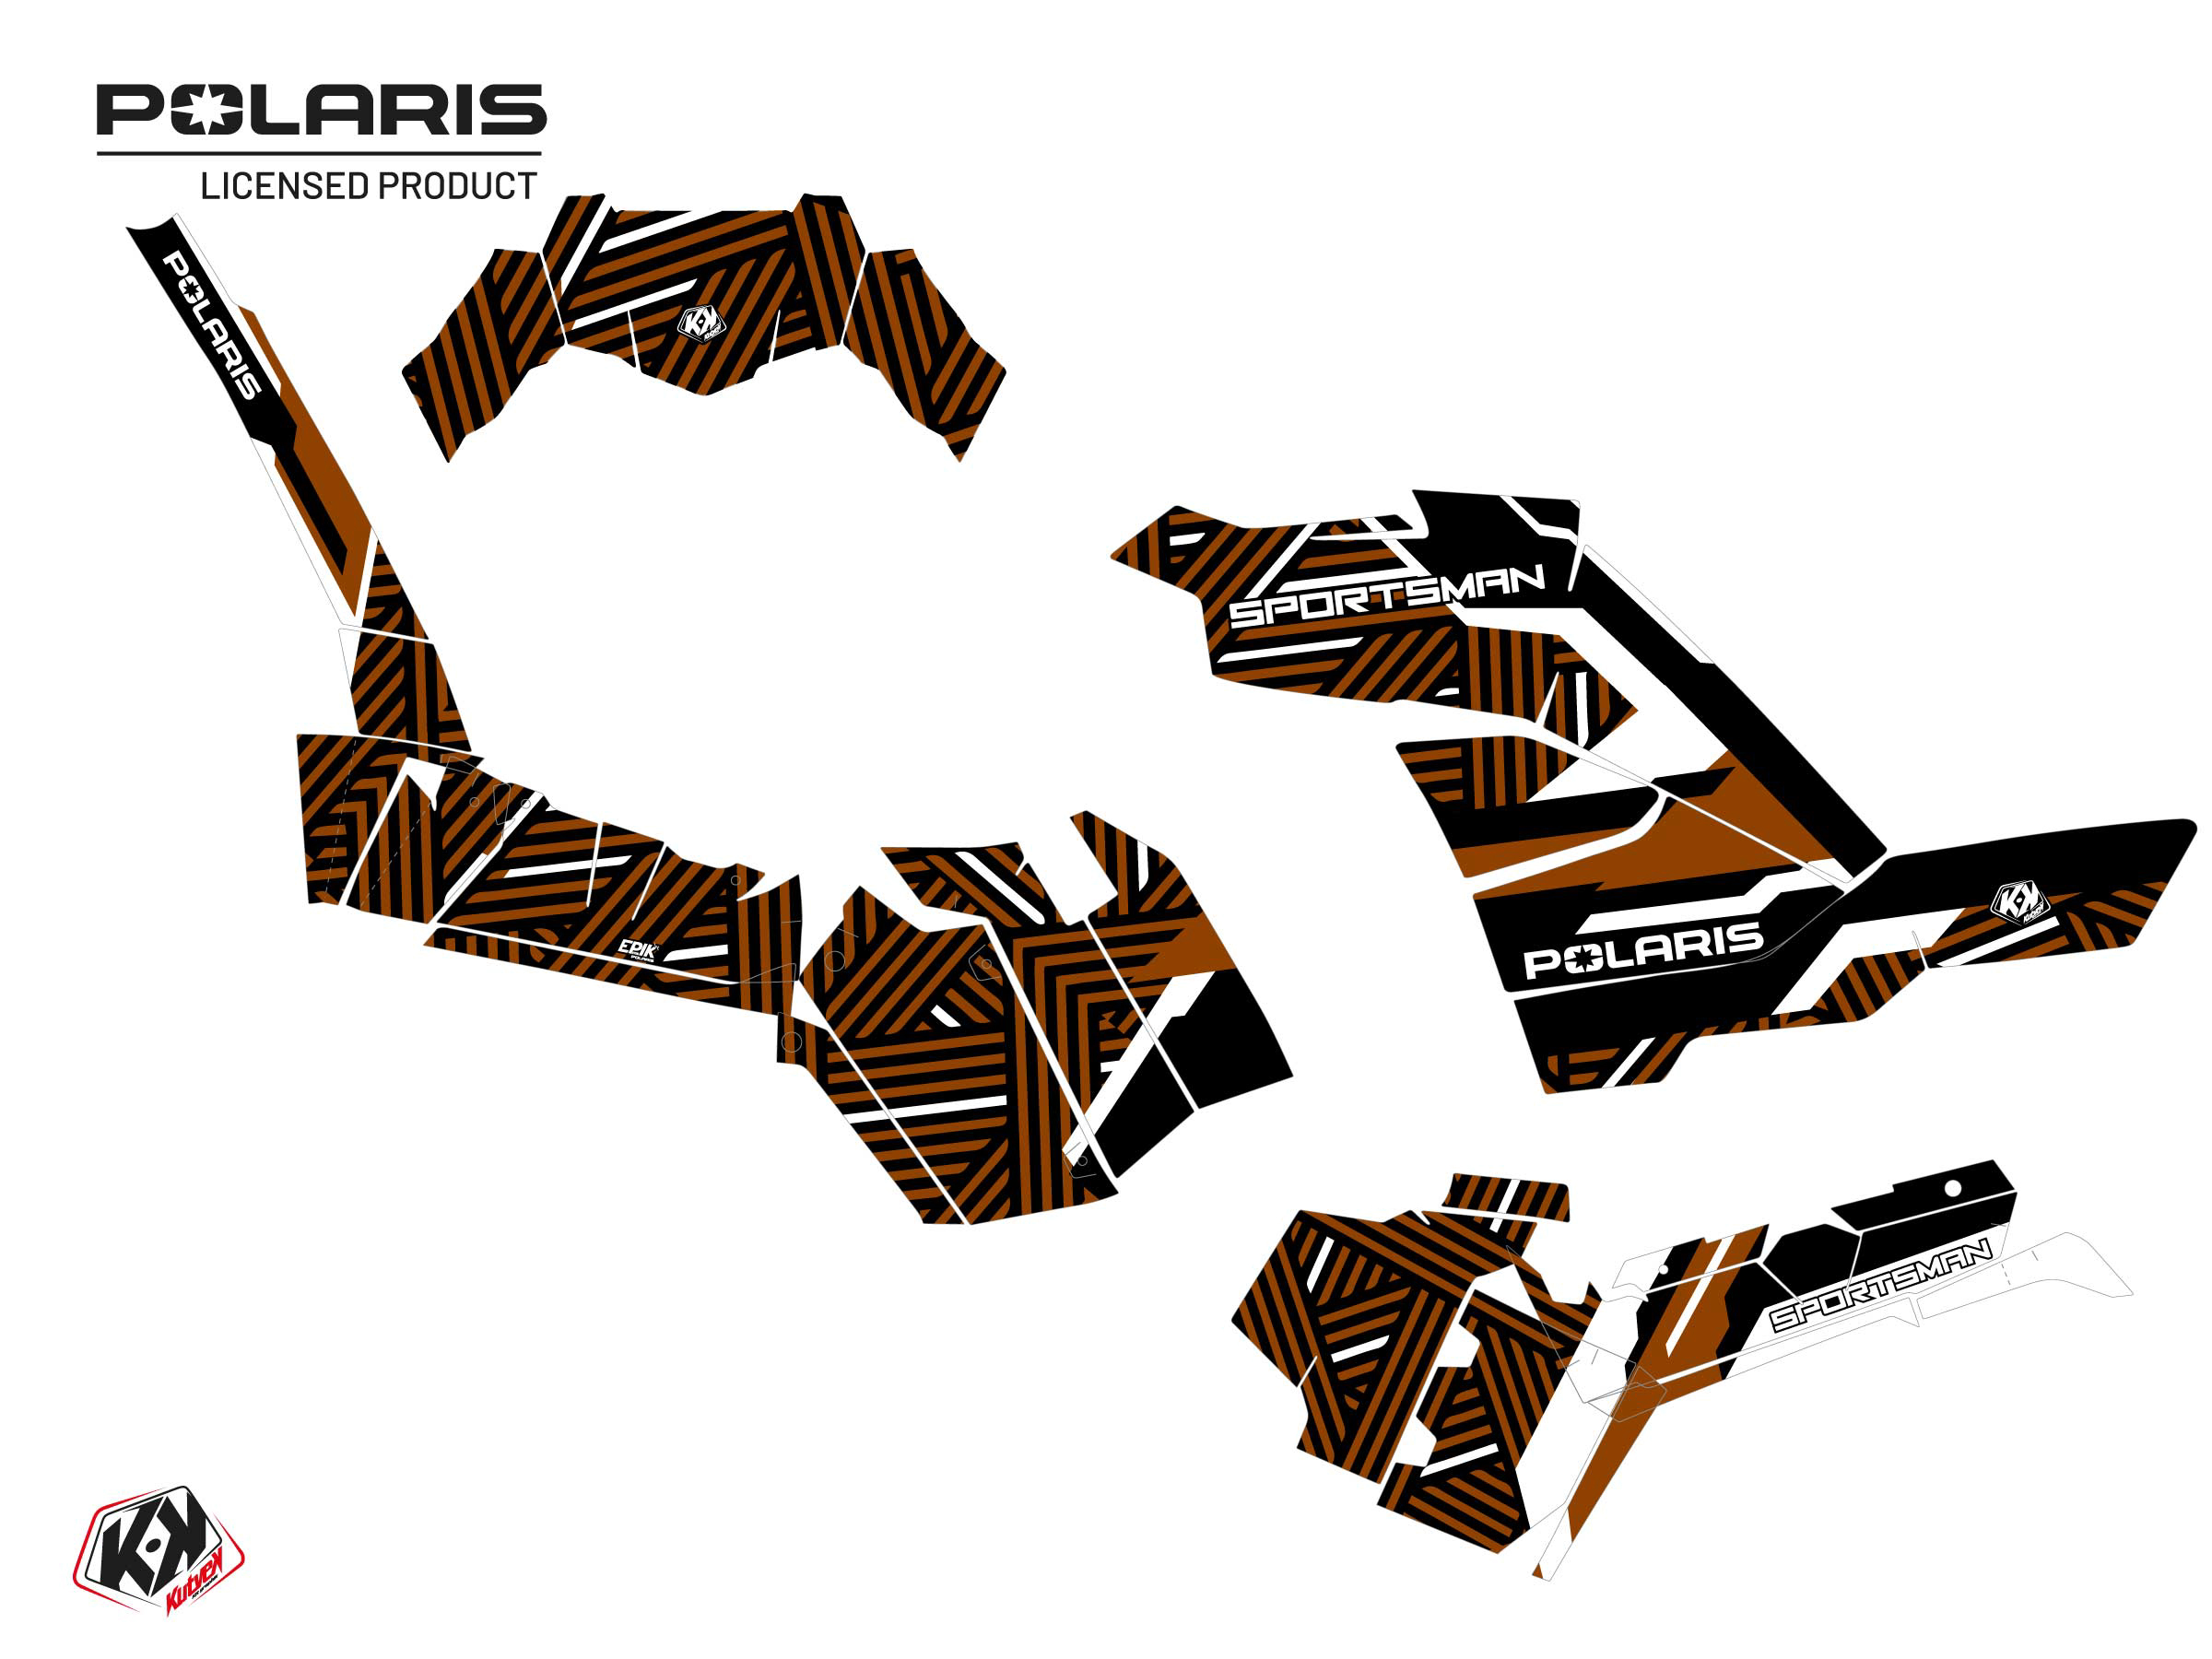 Polaris 1000 Sportsman XP S Forest ATV Epik Graphic Kit Copper